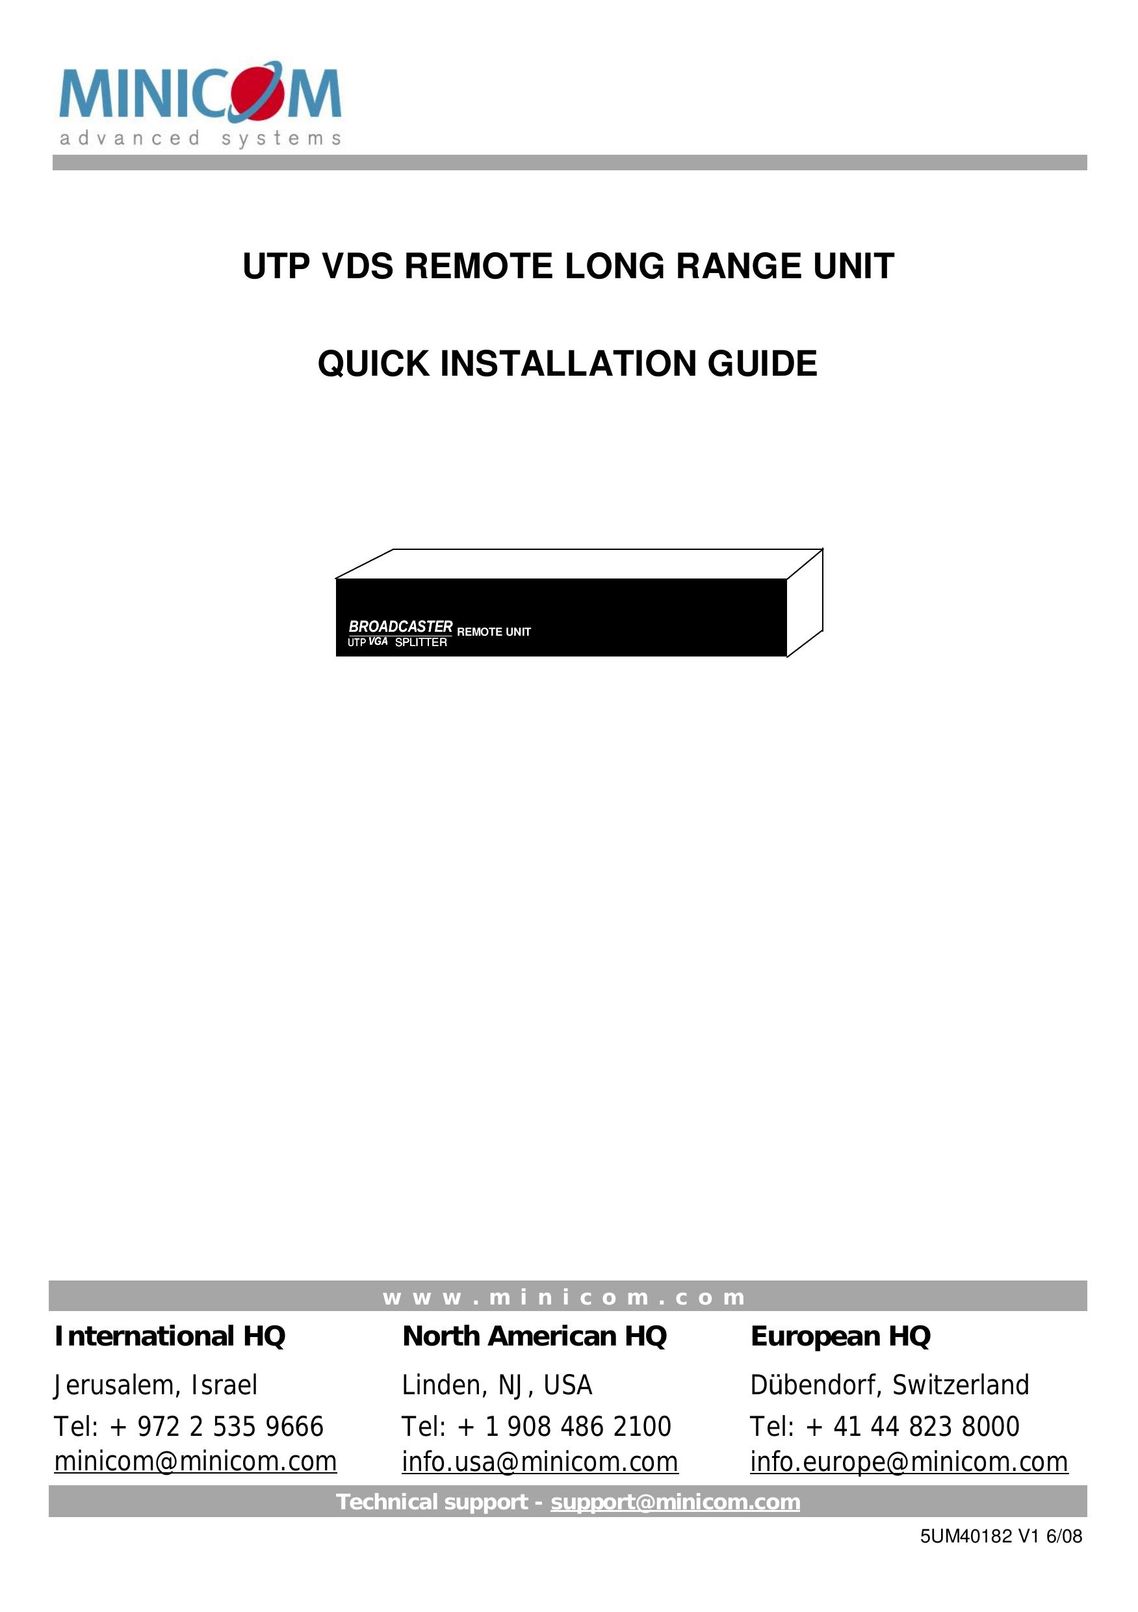 Minicom Advanced Systems UTP VDS Stereo Receiver User Manual